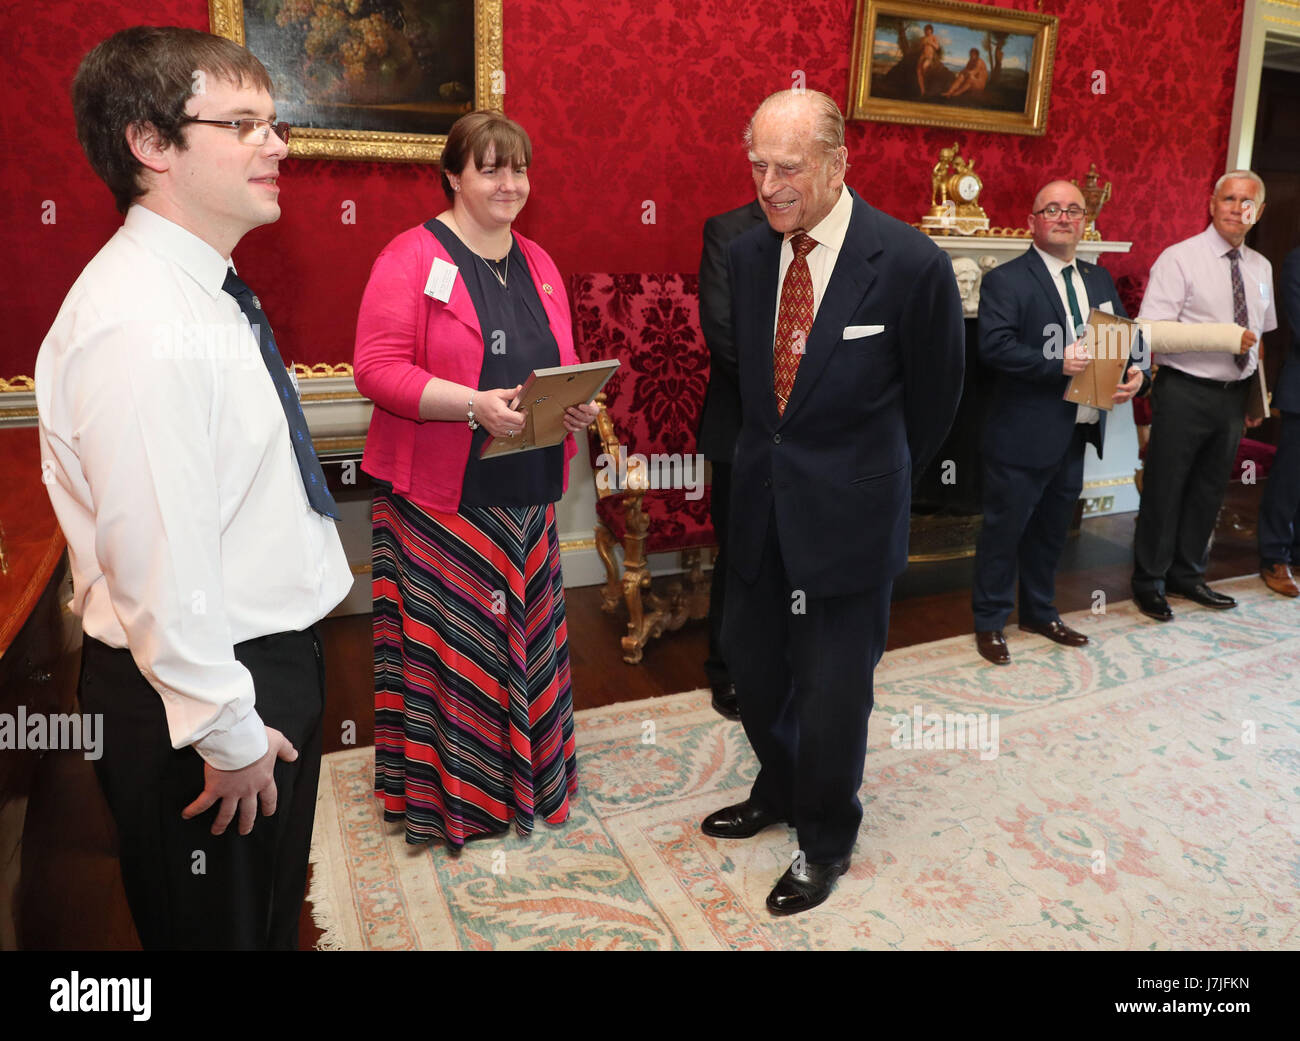 The Duke of Edinburgh hosts the Duke of Edinburgh's Award gold award presentations at Hillsborough Castle in Co Down. Stock Photo